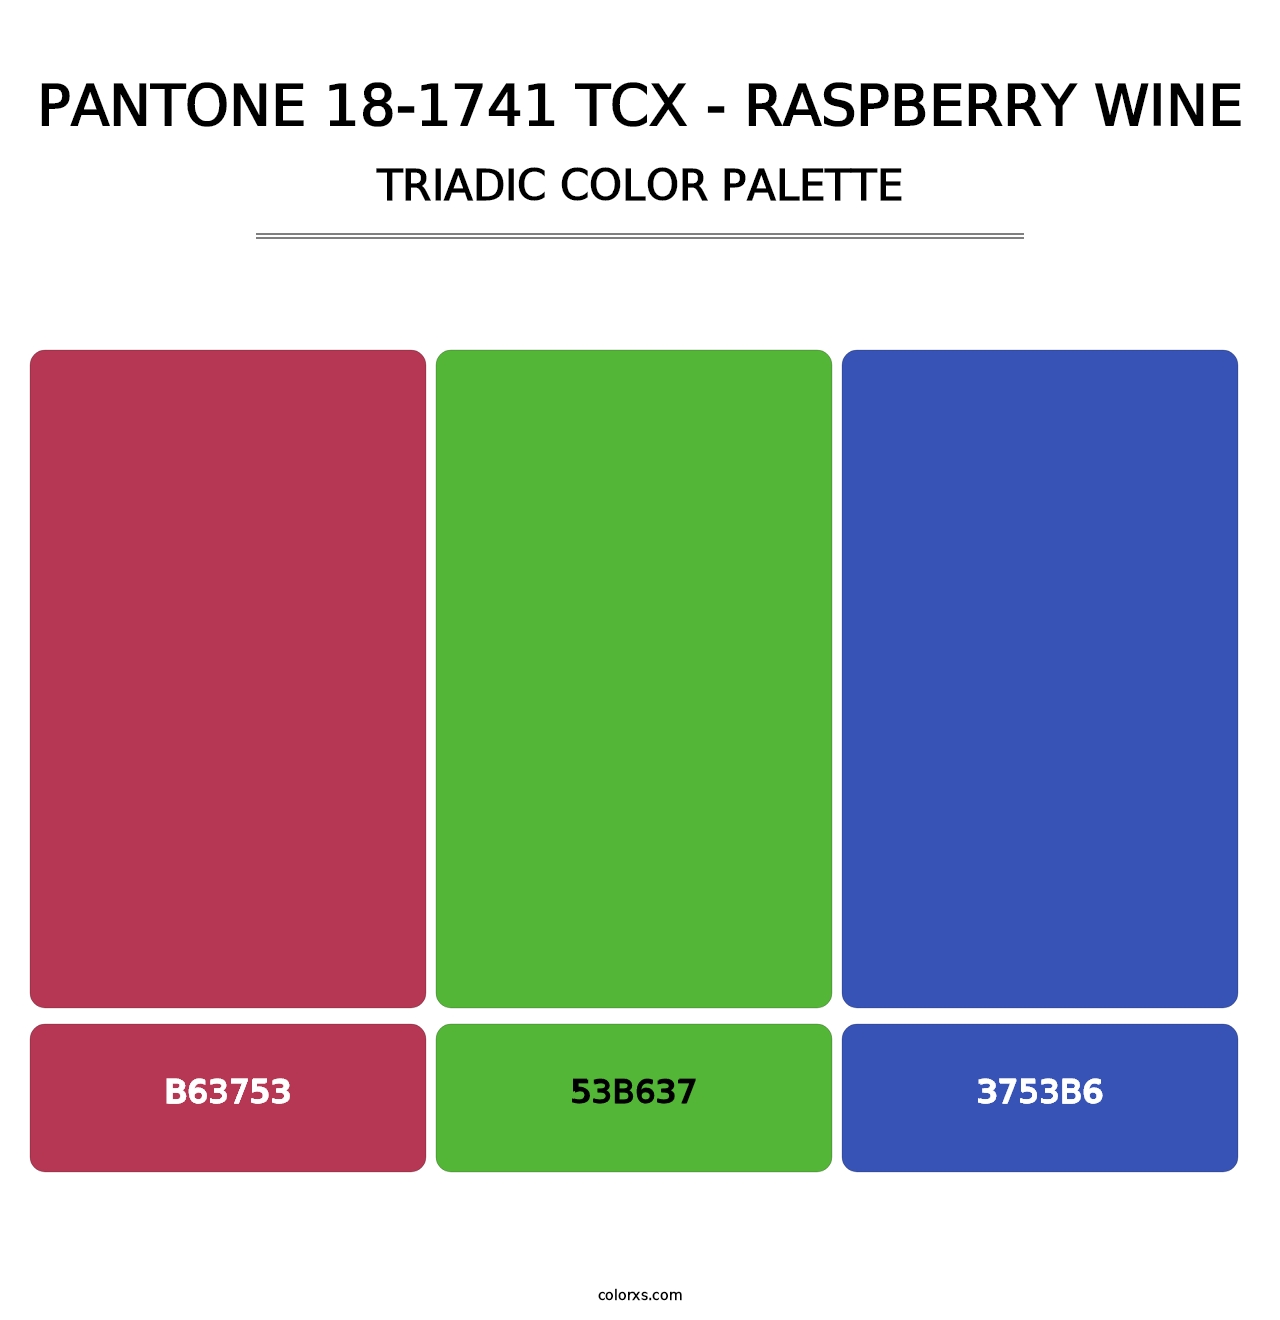 PANTONE 18-1741 TCX - Raspberry Wine - Triadic Color Palette